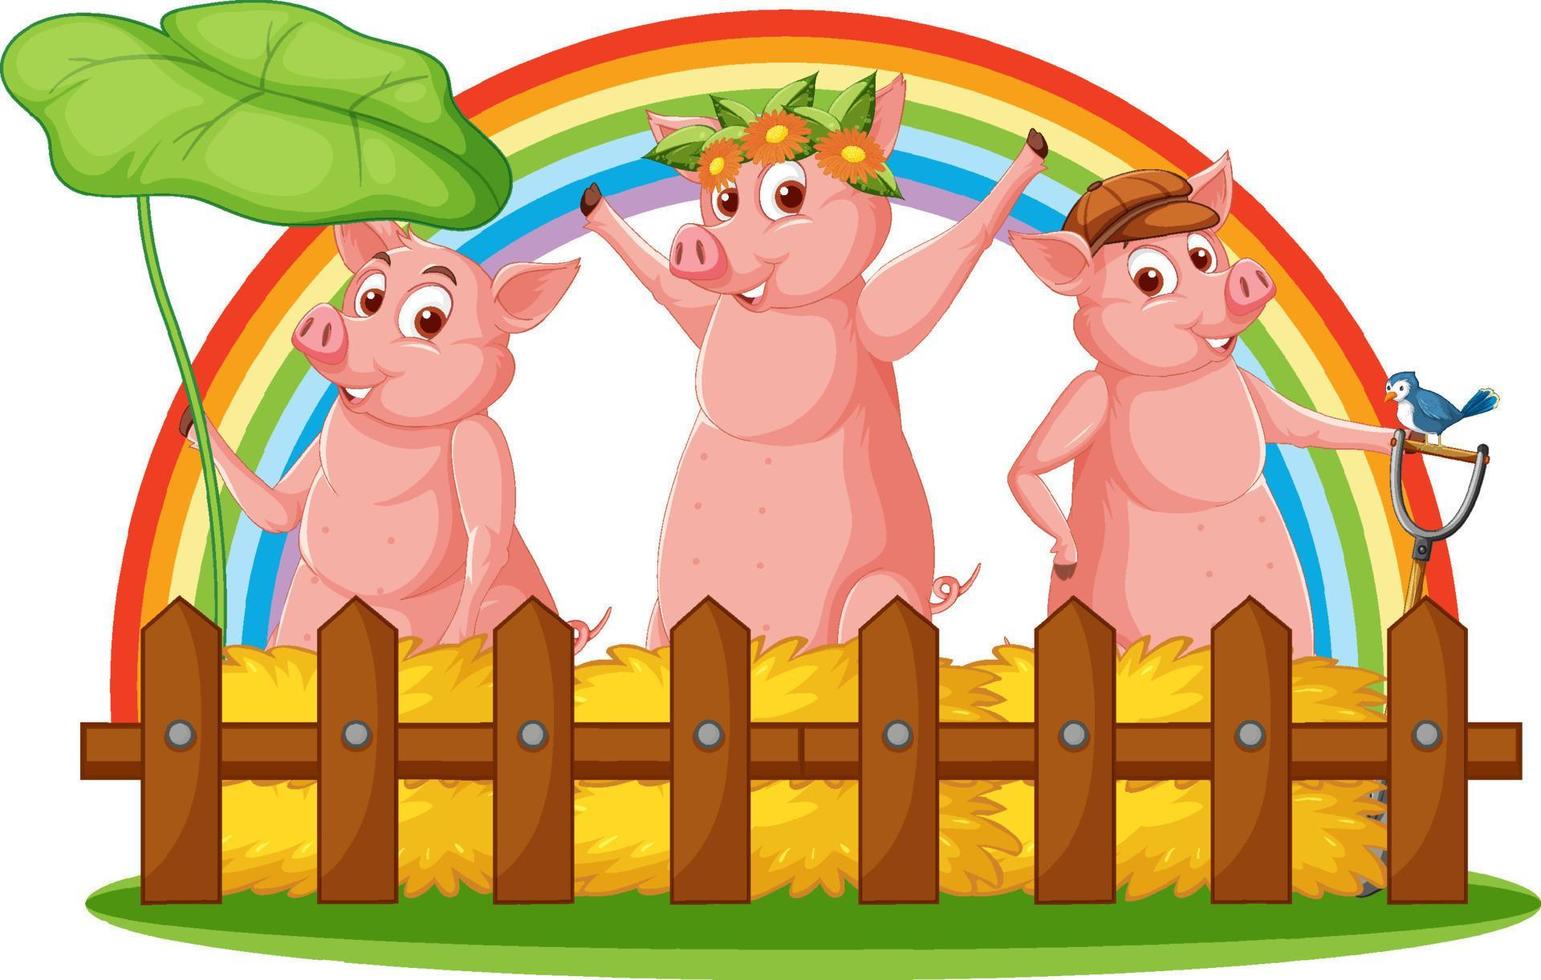 Cartoon three little pigs with rainbow background vector